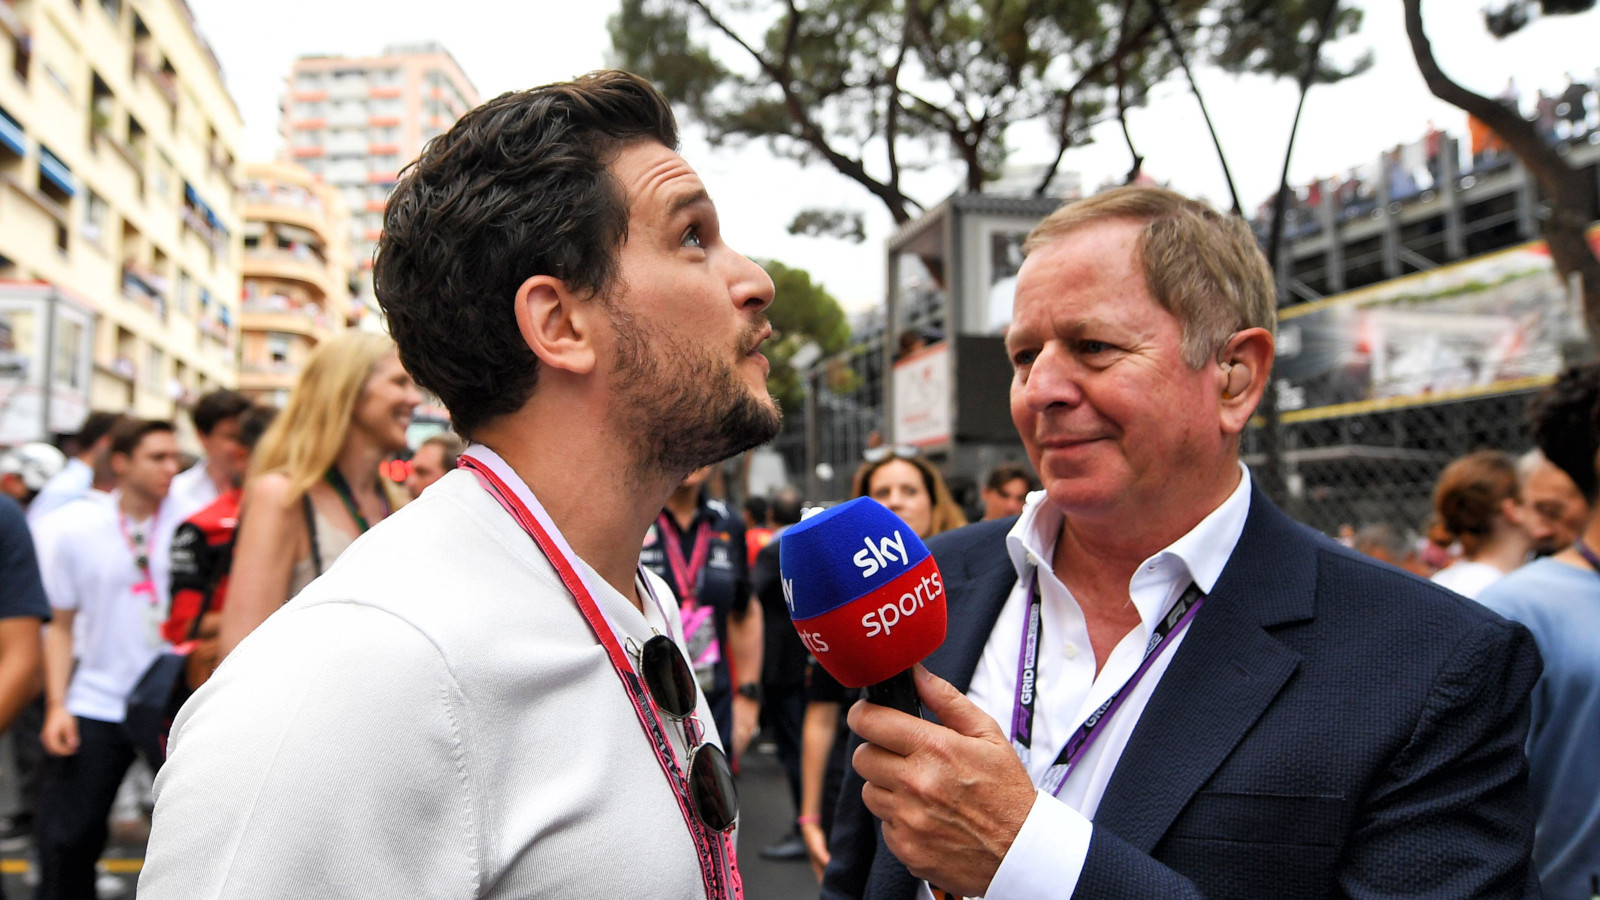 Martin Brundle interviews Kit Harrington during his grid walk. Monaco May 2022